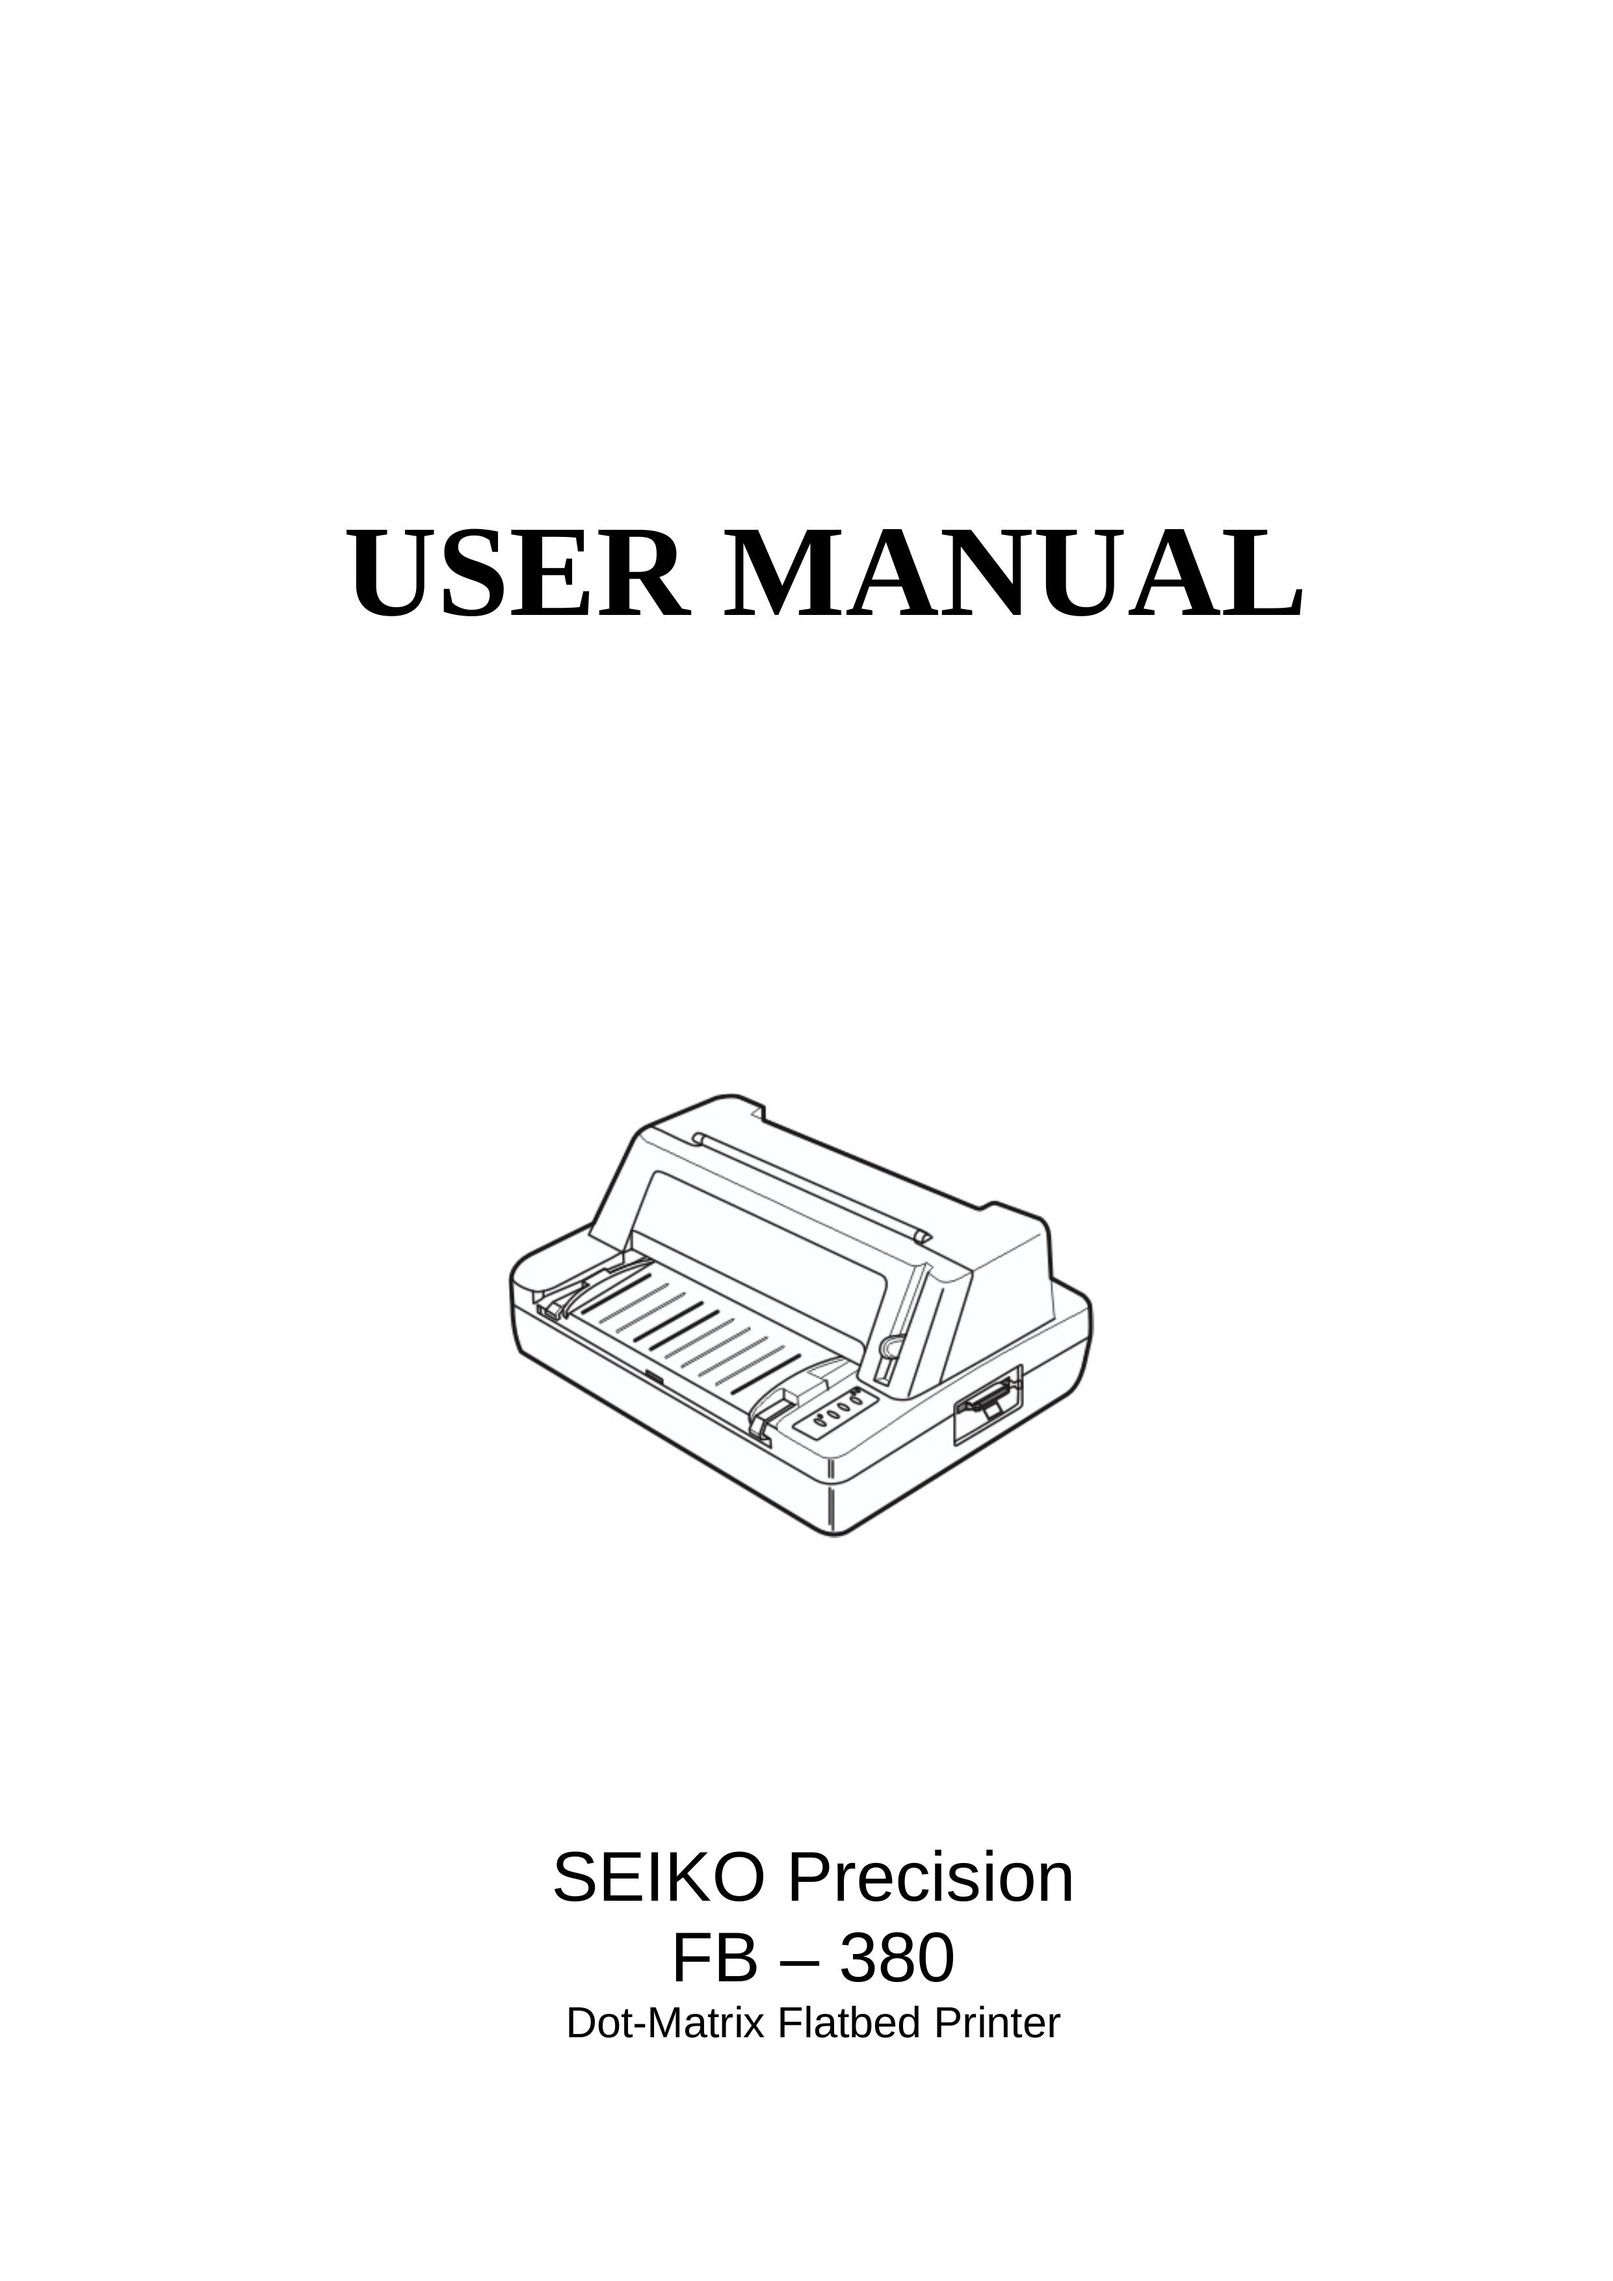 Seiko Group FB 380 Printer User Manual